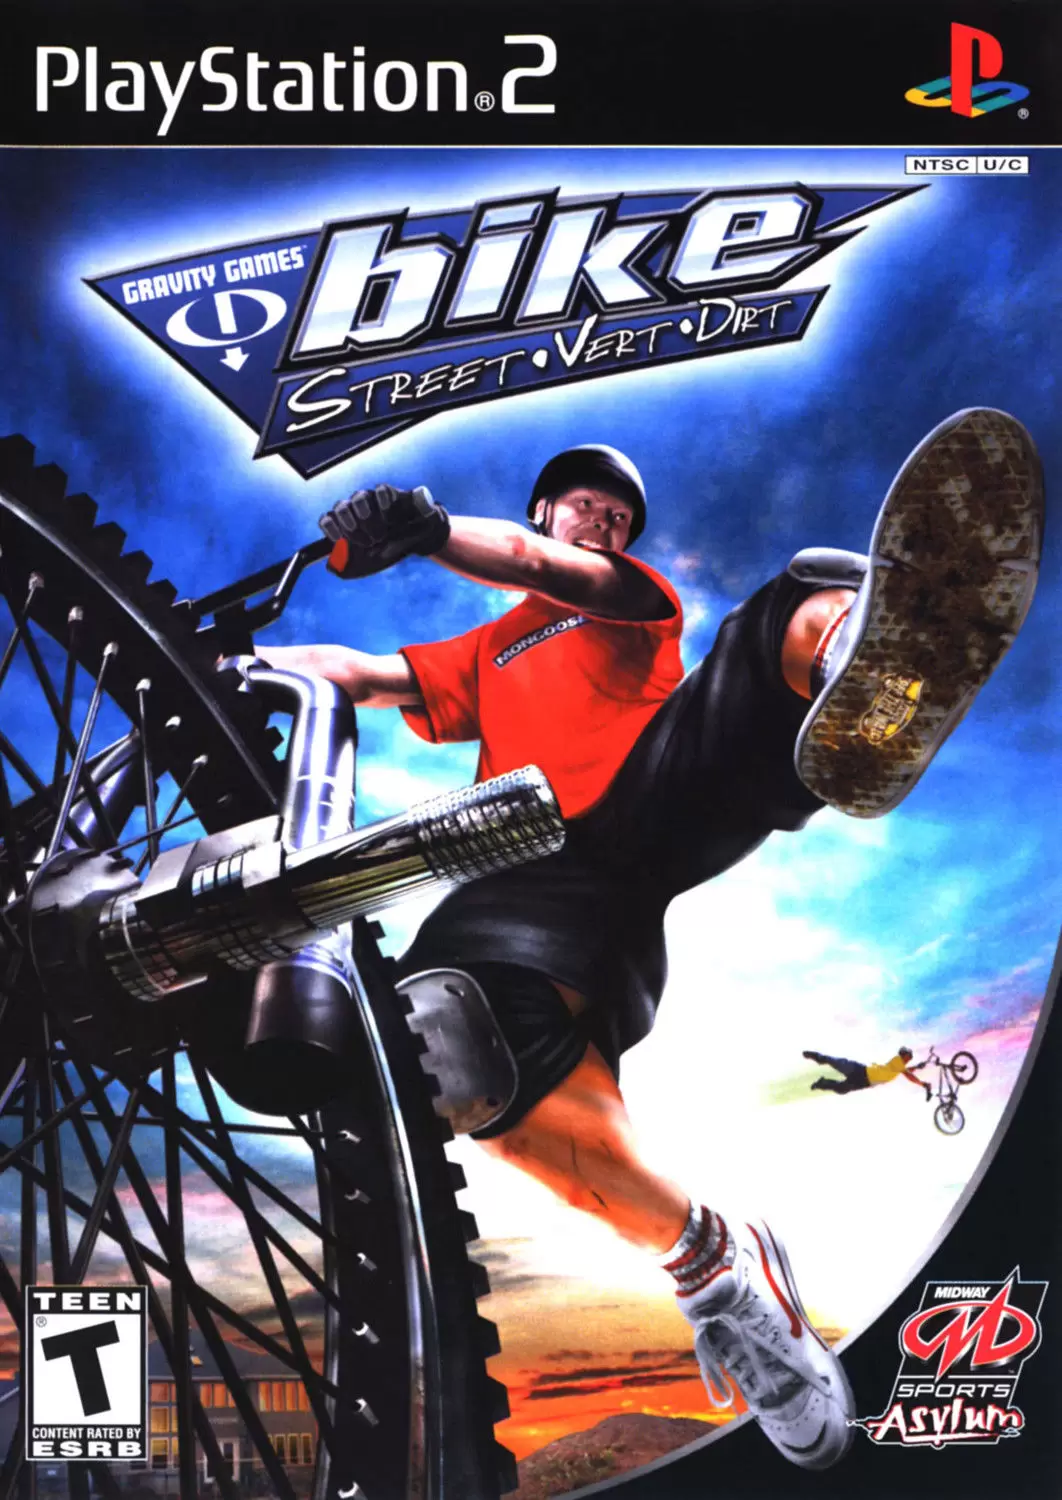 PS2 Games - Gravity Games Bike: Street Vert Dirt